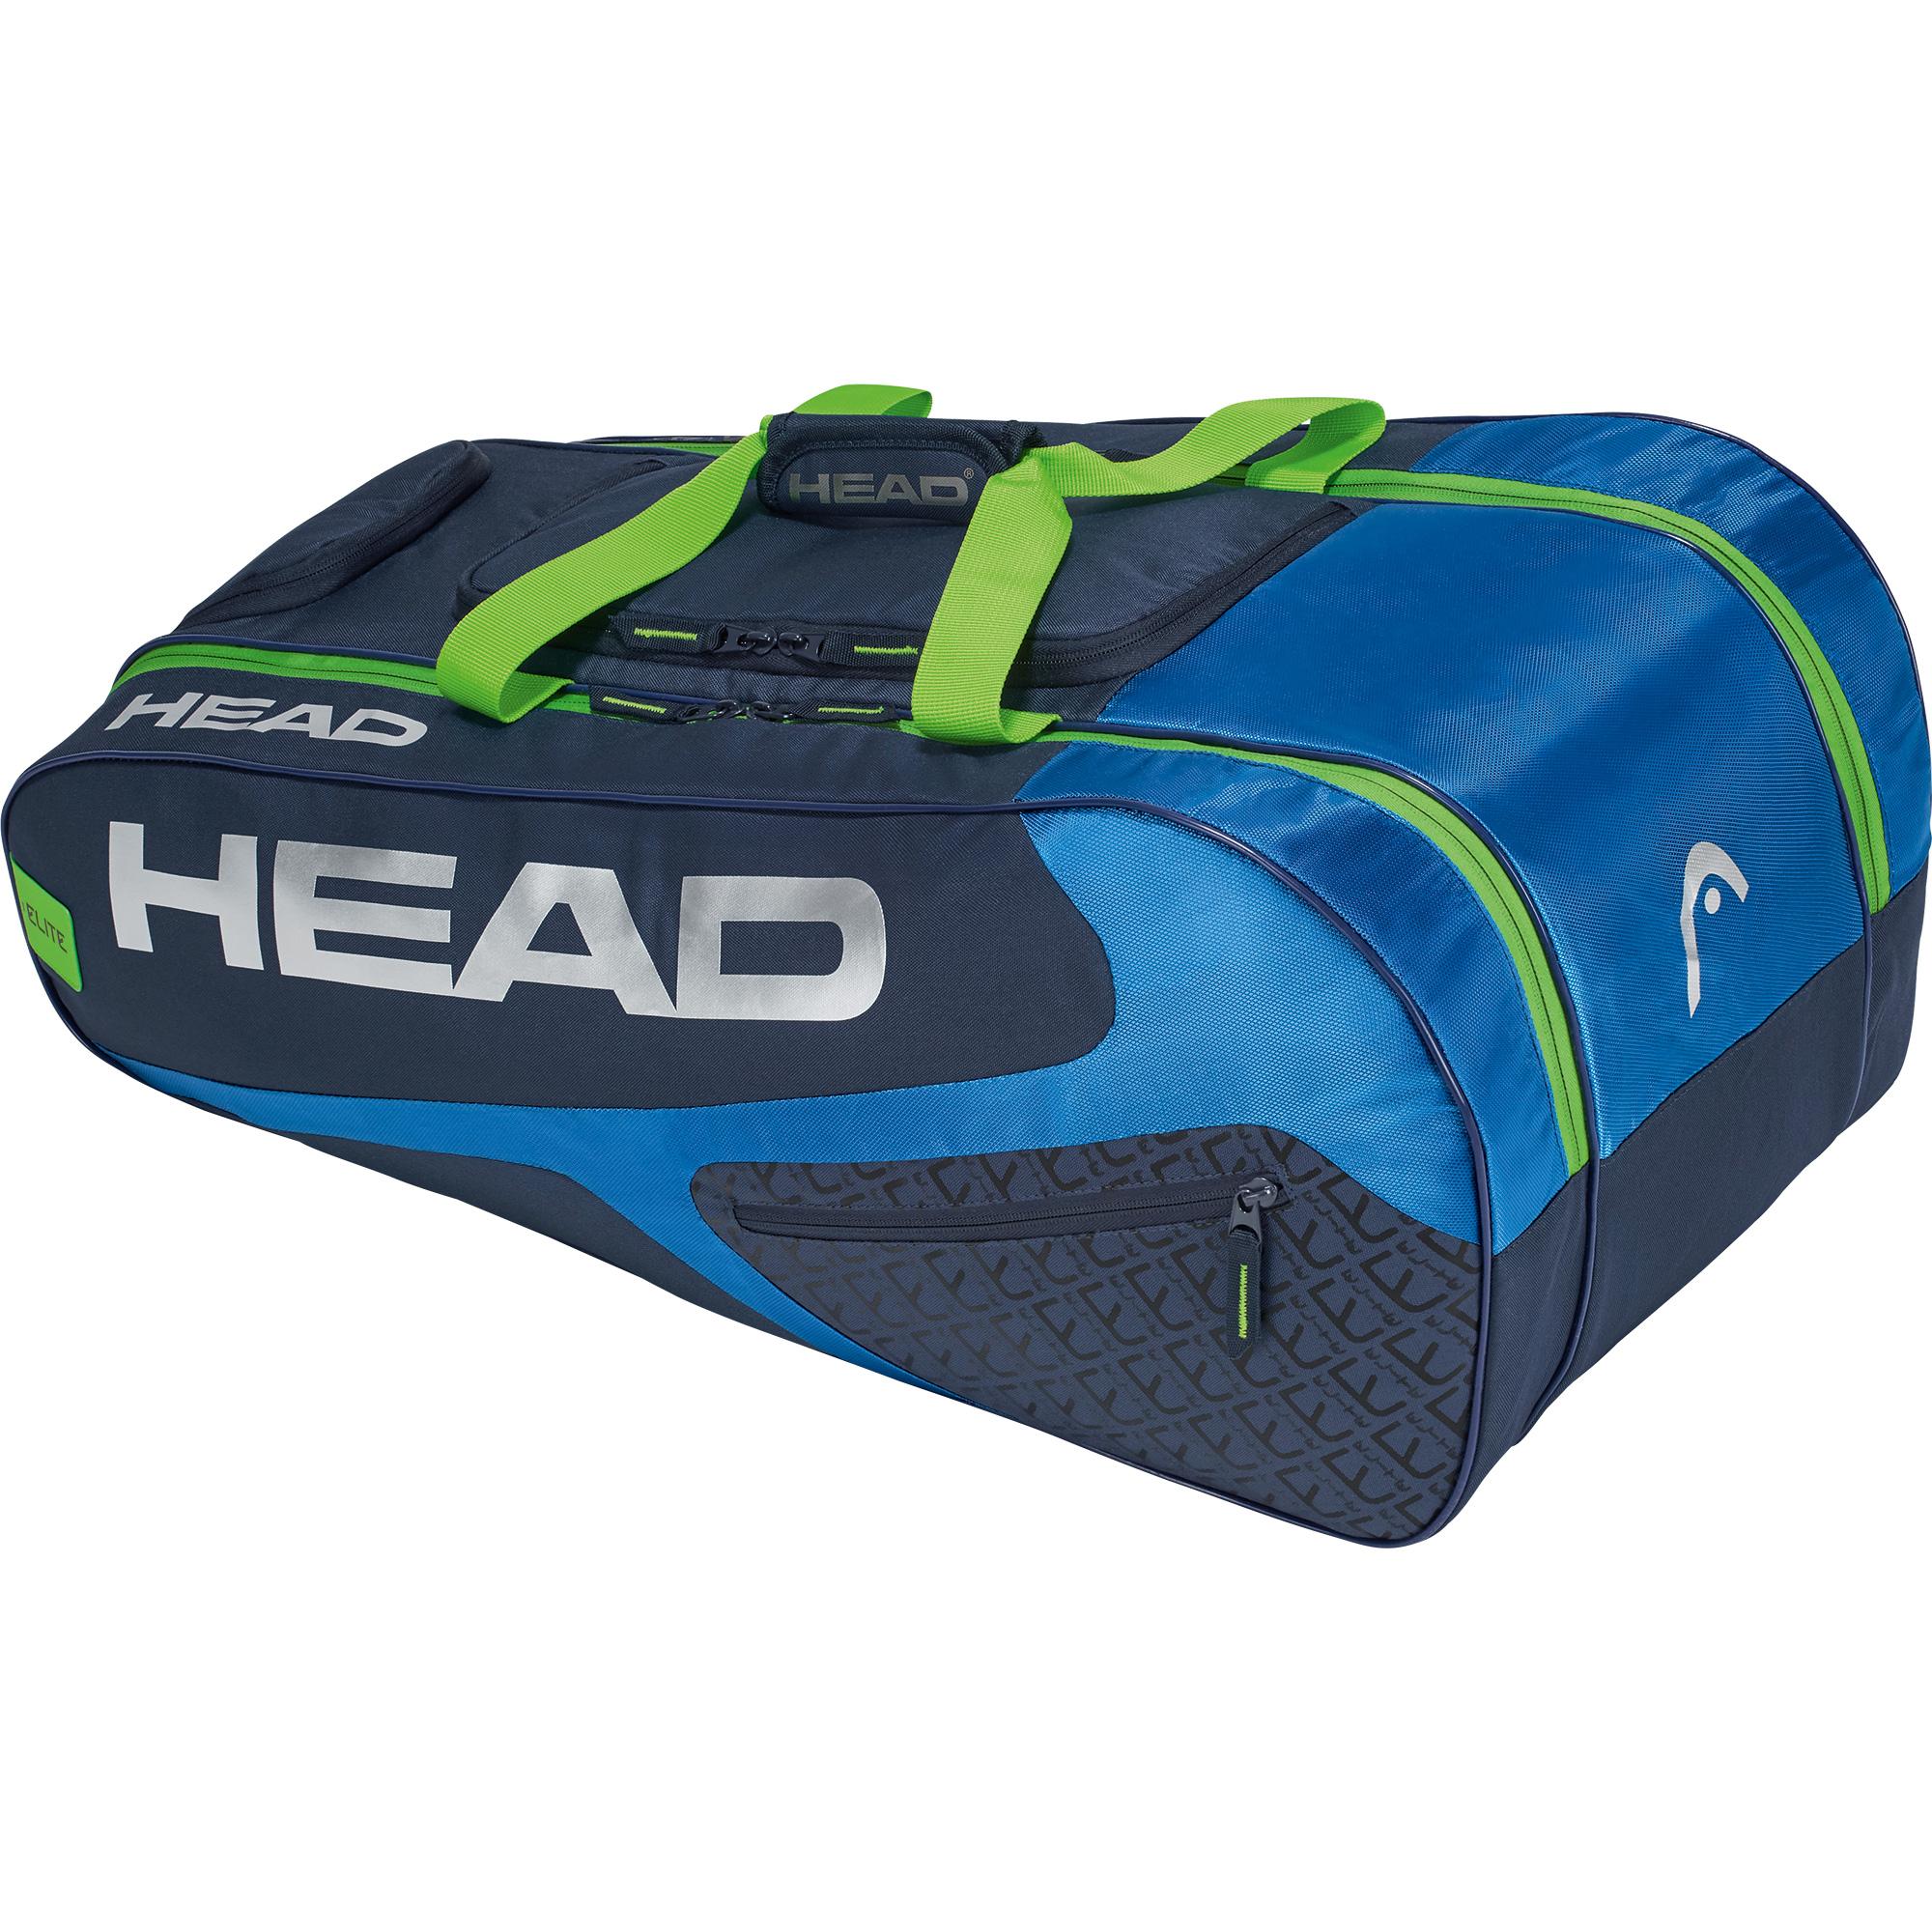 Head Elite All Court Racket Bag - Blue/Green (2020) - Tennisnuts.com